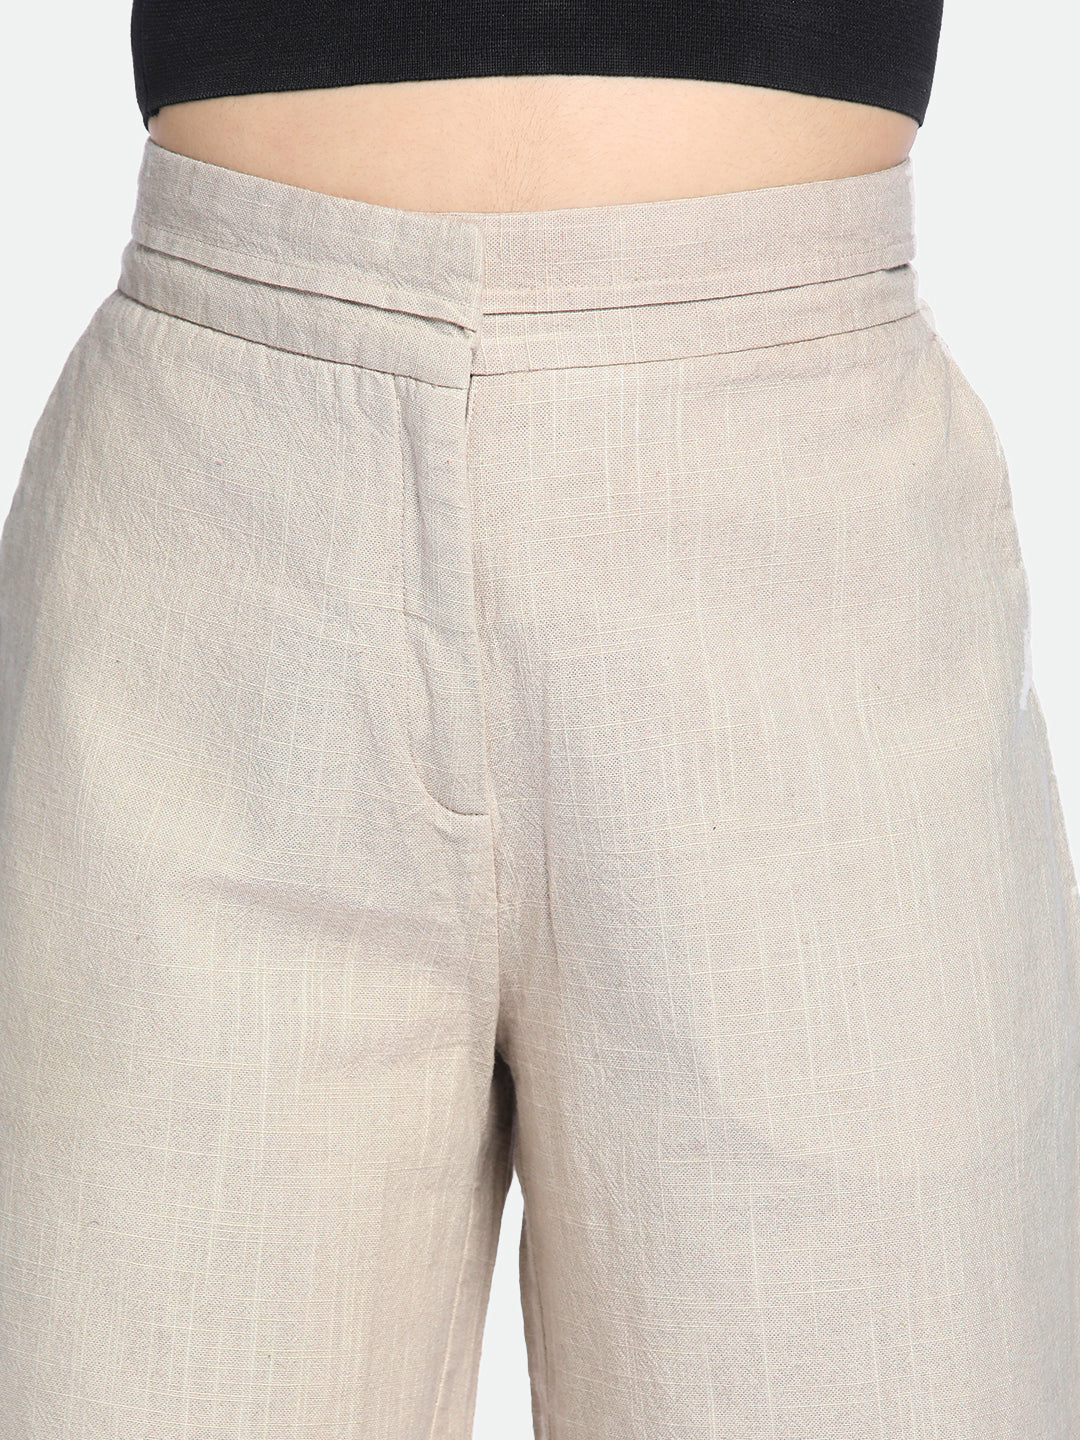 DL Woman Grey Cotton Trousers